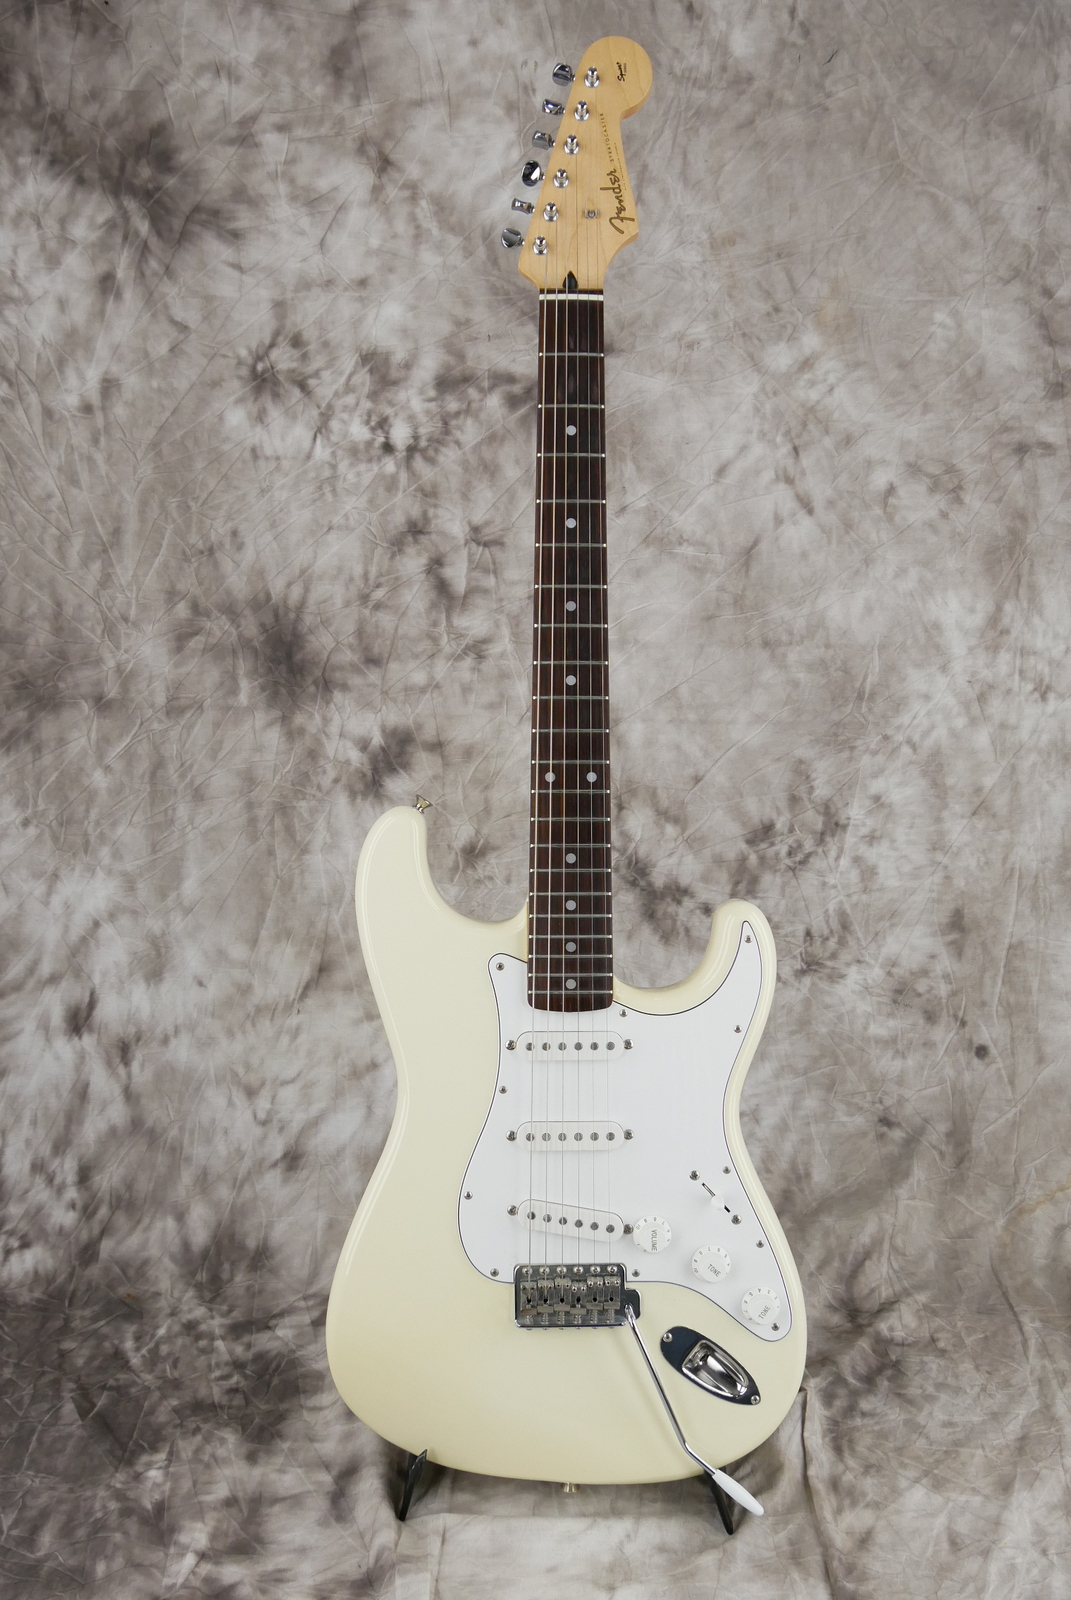 img/vintage/5375/Fender_Stratocaster_Squier_series_Japan_olympic_white_1993-001.JPG